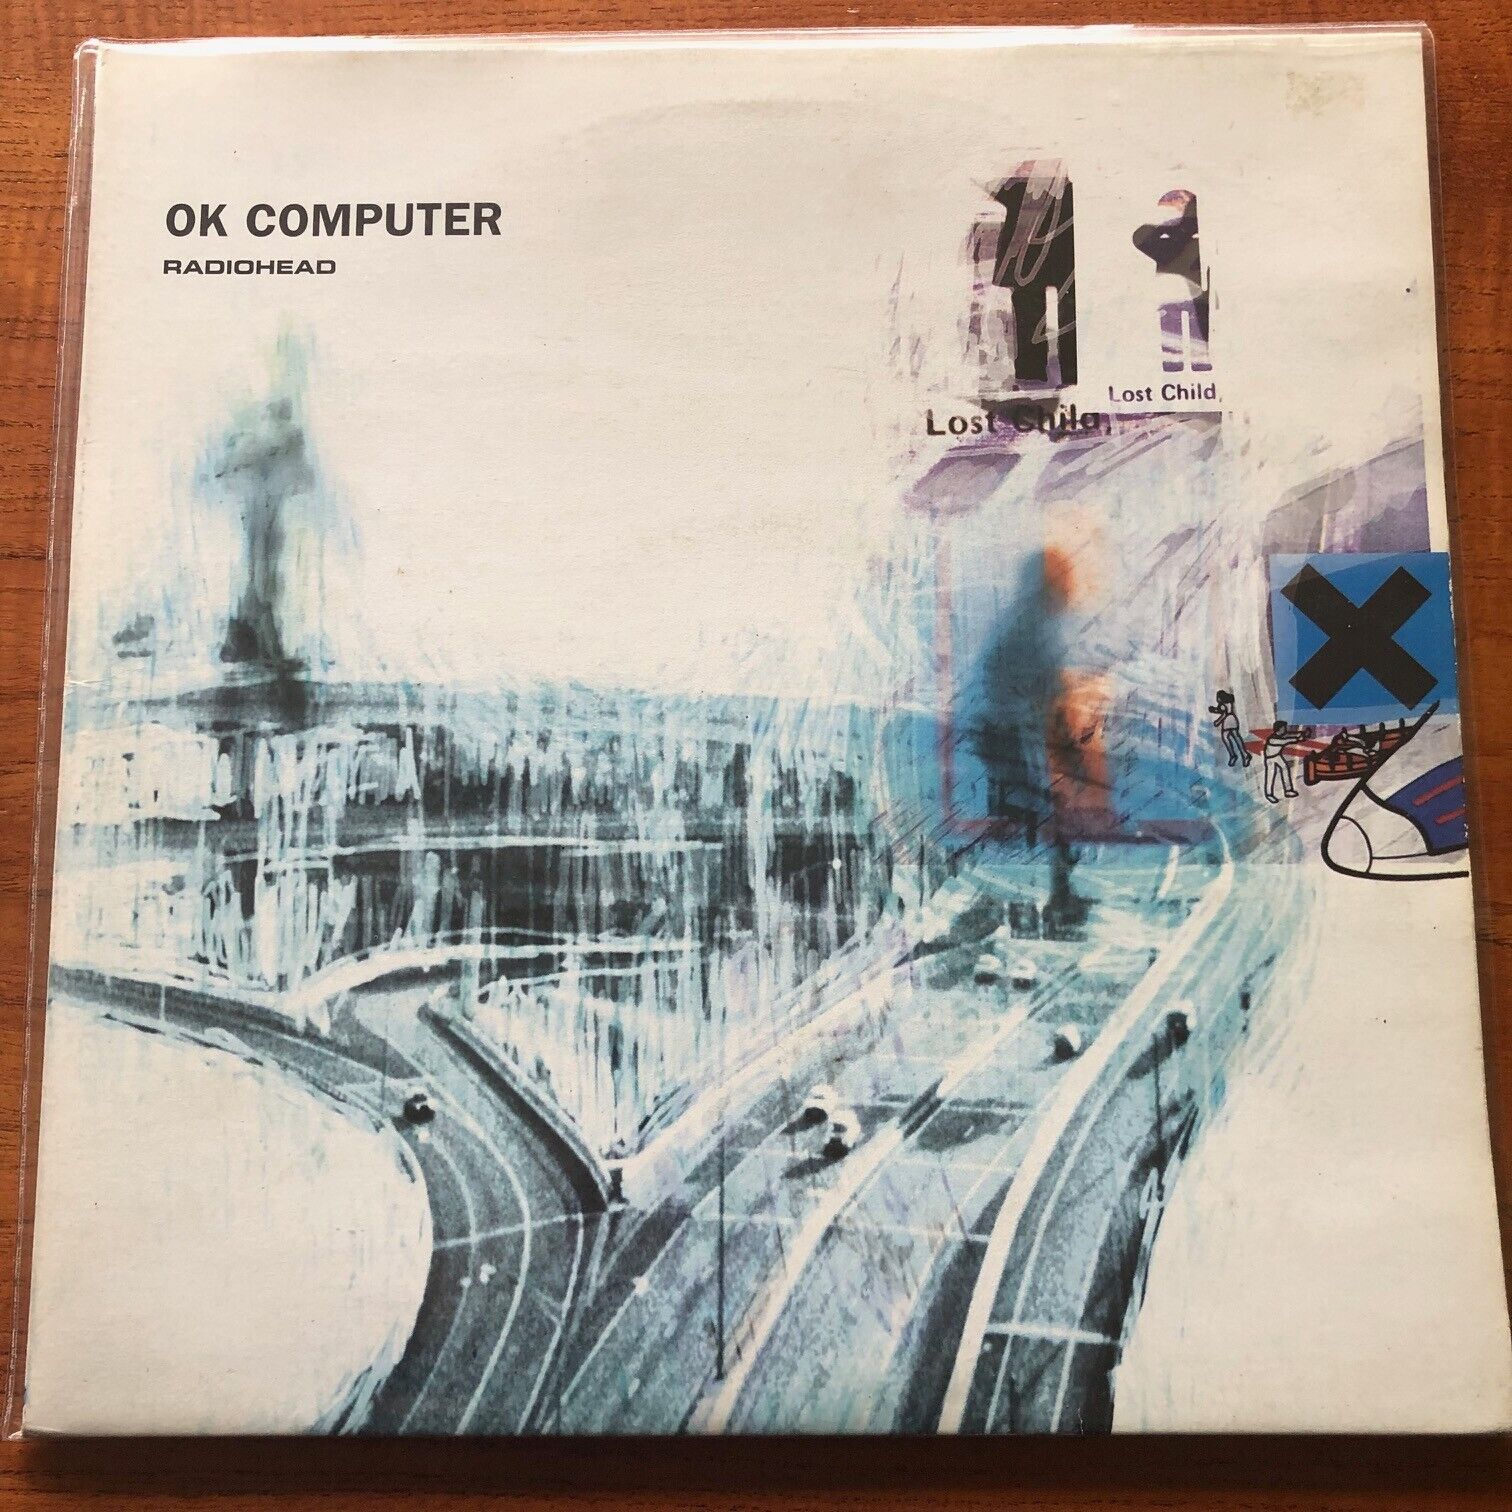 radiohead-ok-computer-1997-2lp-gatefold-uk-release-nodata-02-first-pressing